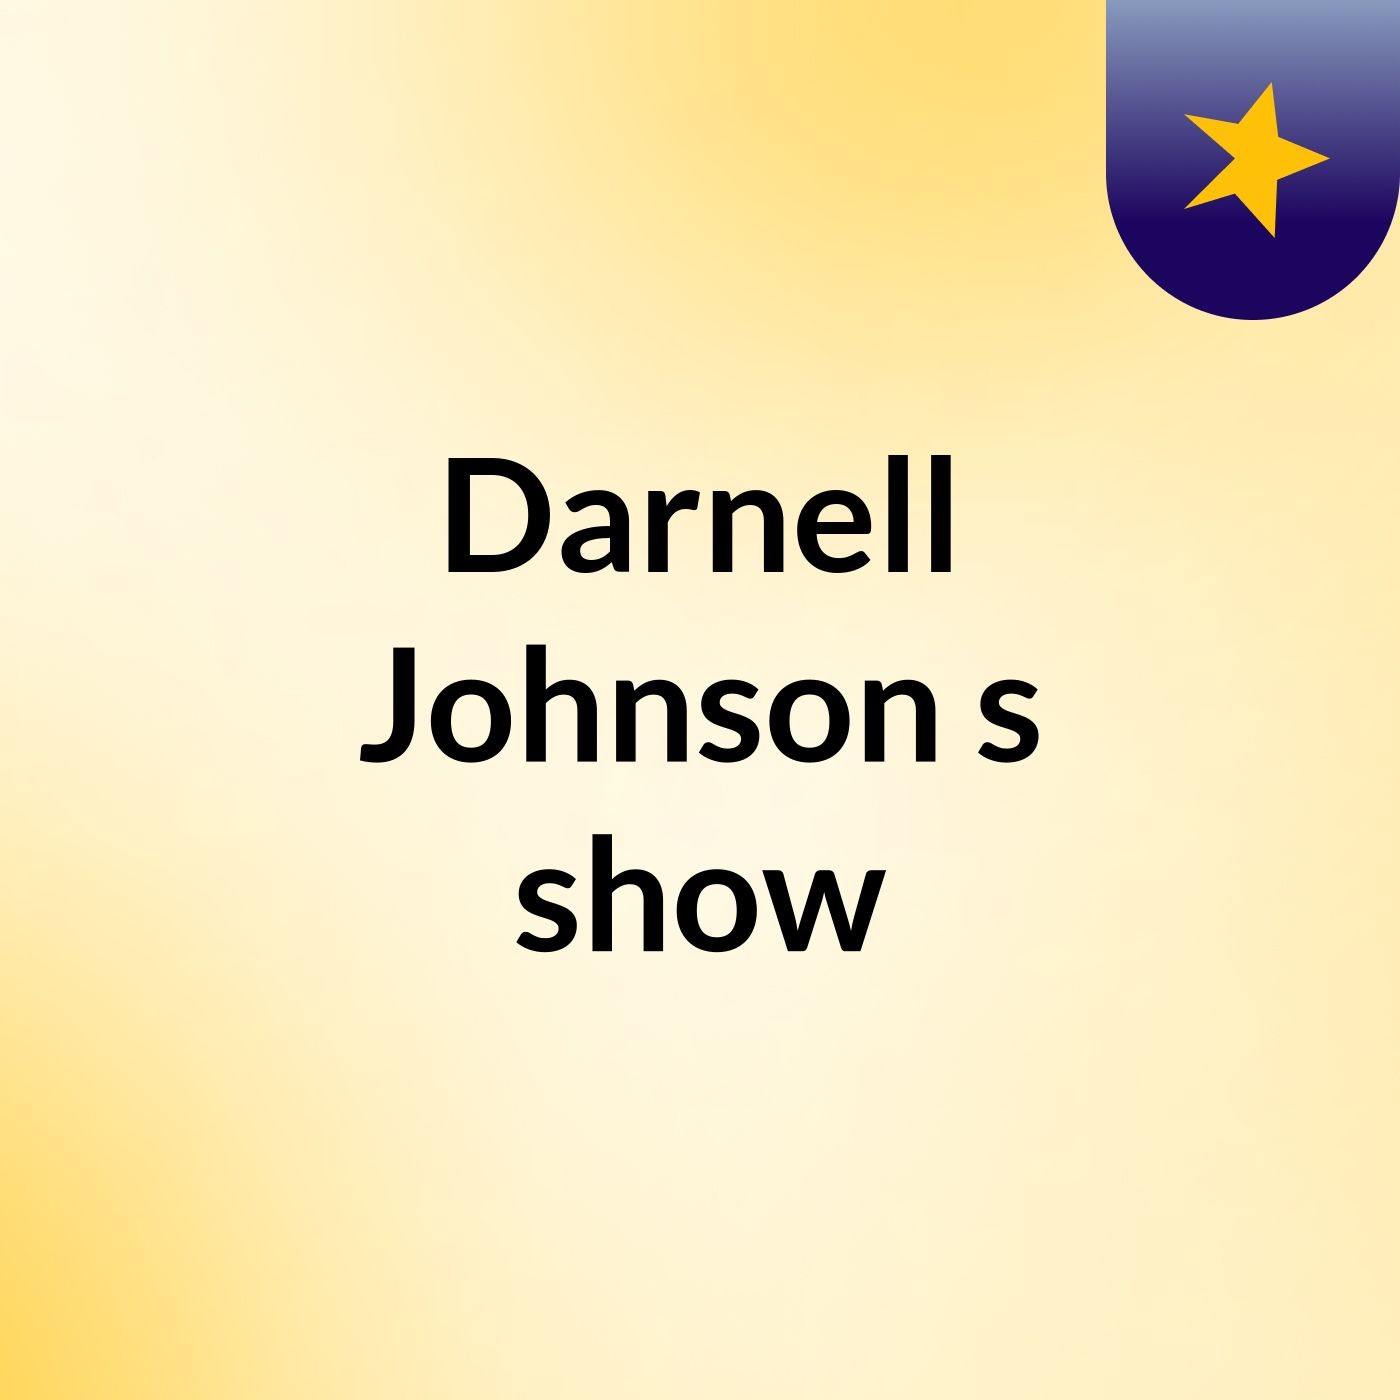 Episode 3 - Darnell Johnson's show